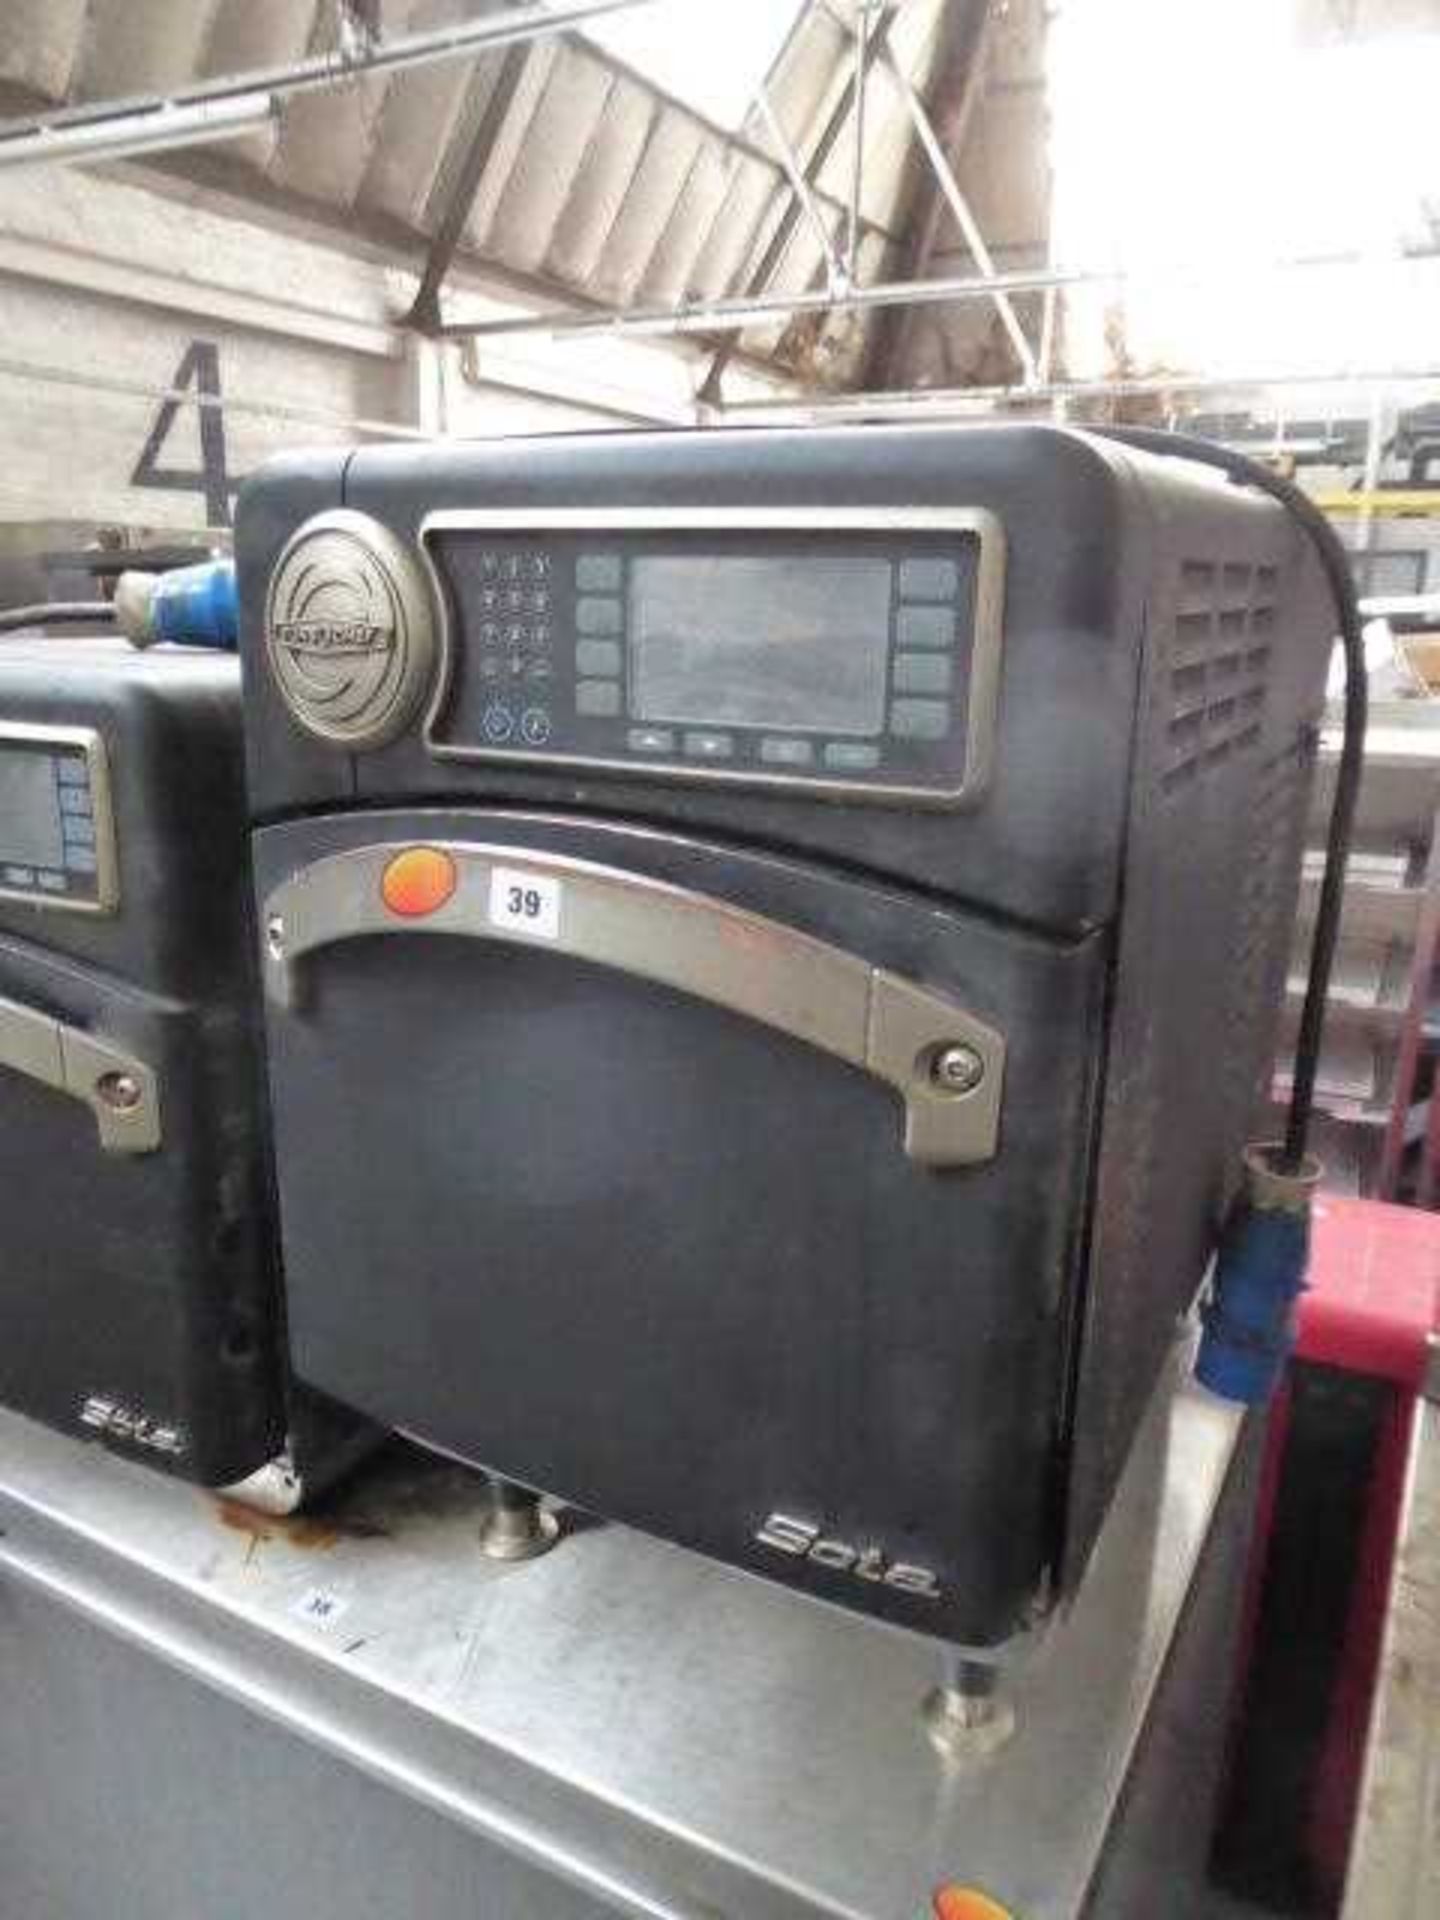 40cm Turbo Chef Sota combination microwave oven